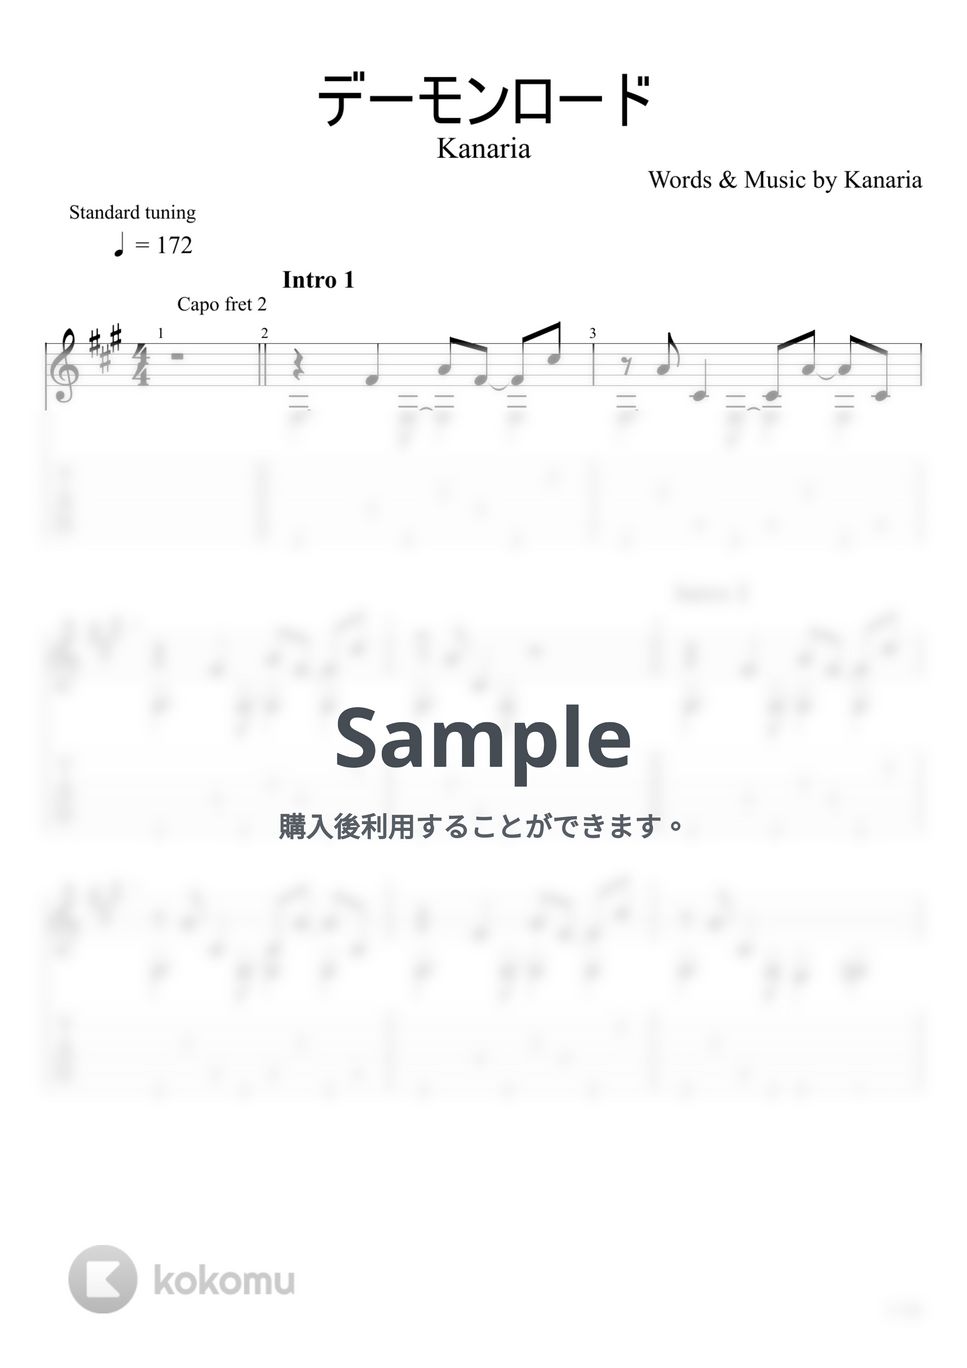 Kanaria - デーモンロード (ソロギター) by u3danchou